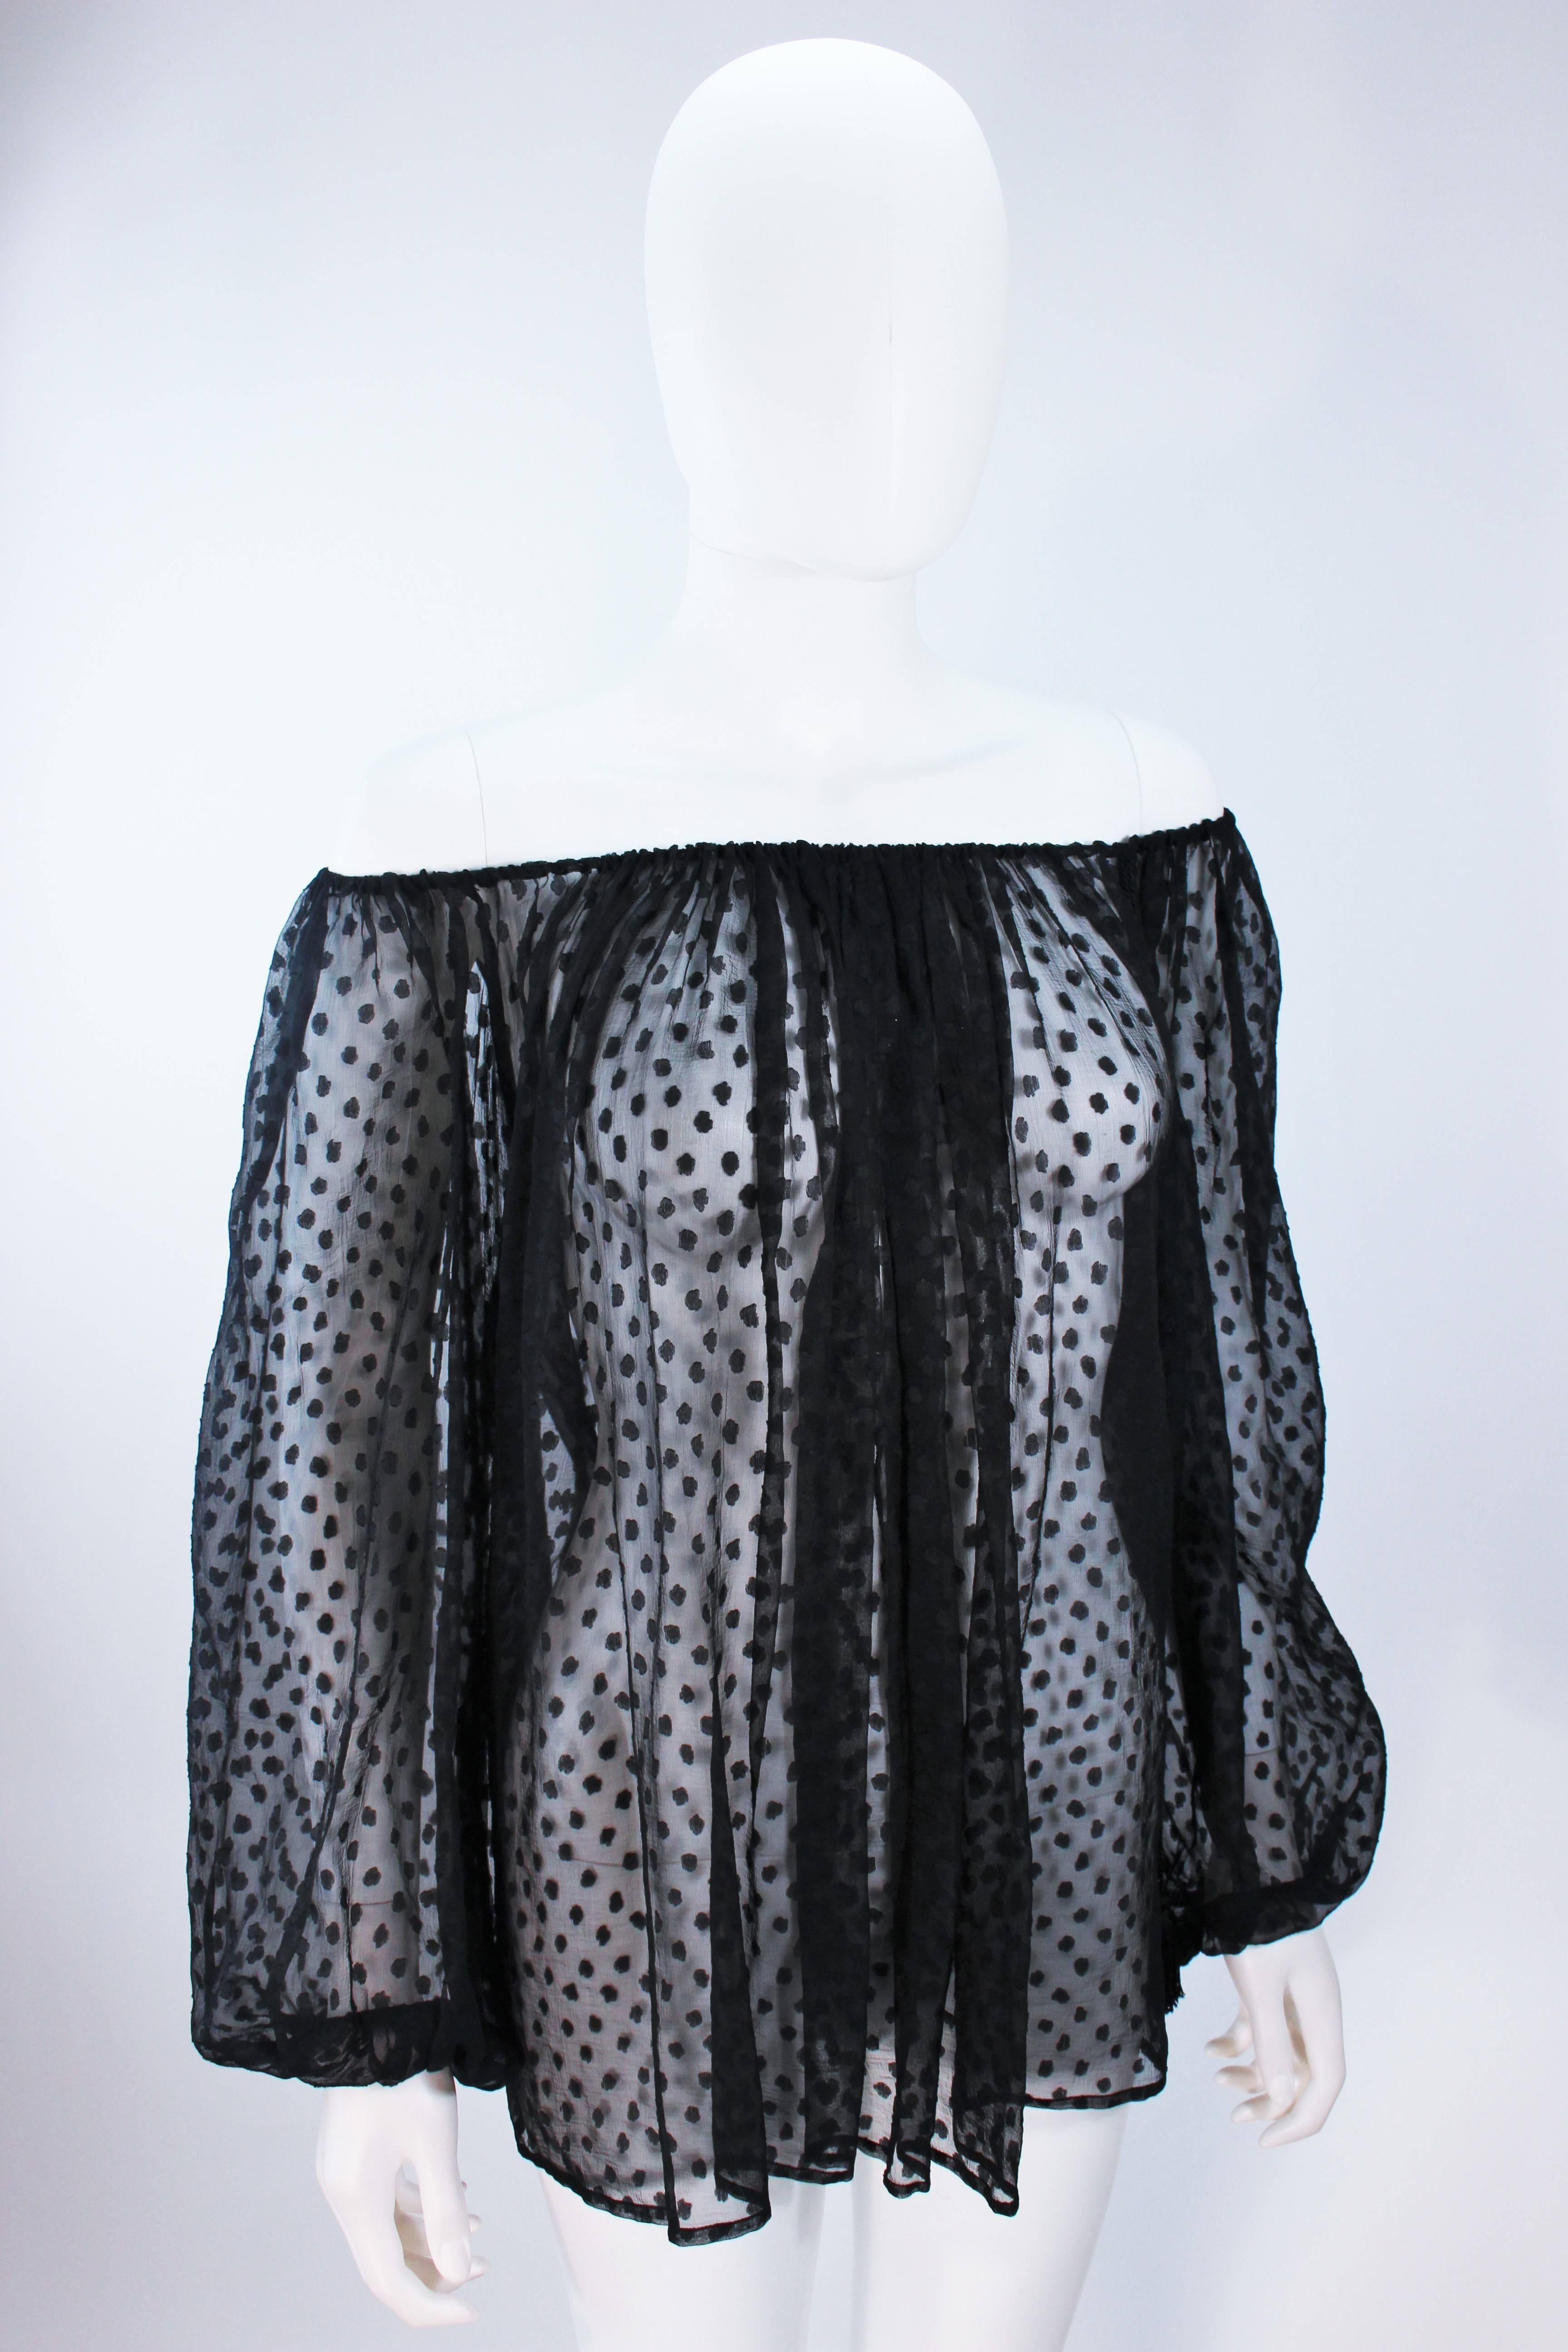 YVES SAINT LAURENT Black Silk Polka Dot Blouse with Billow Sleeves Size 36 1